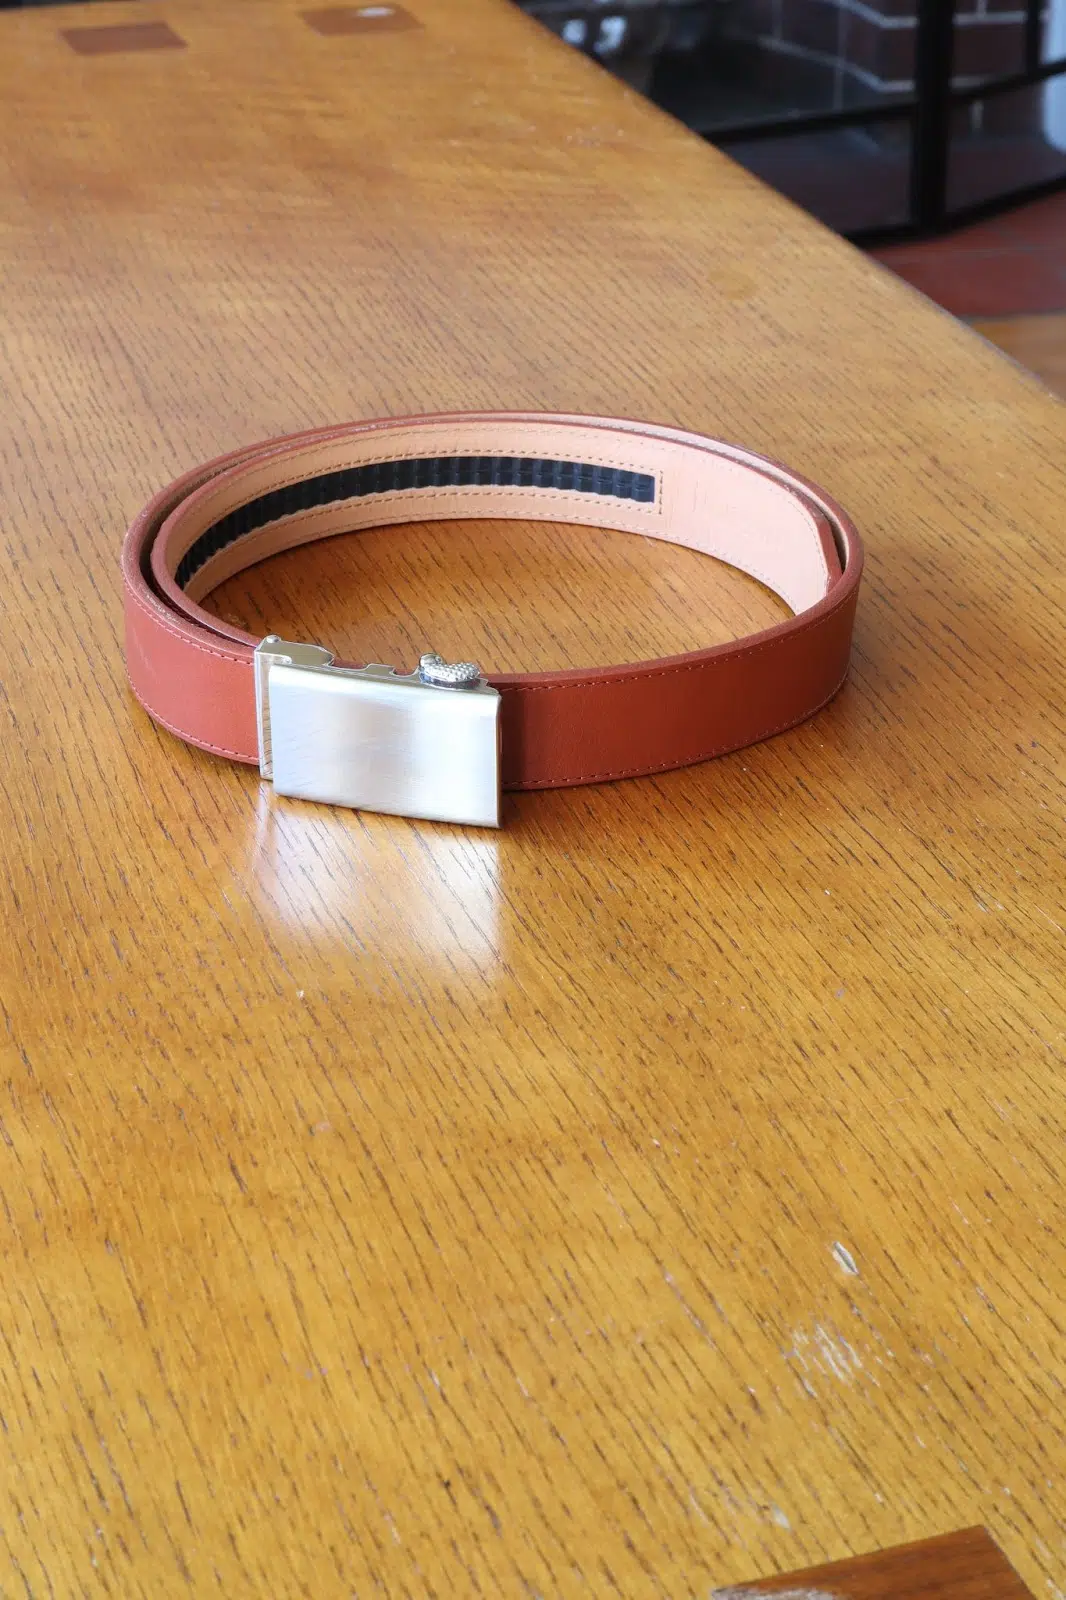 Mission Belt Italian leather dress belt